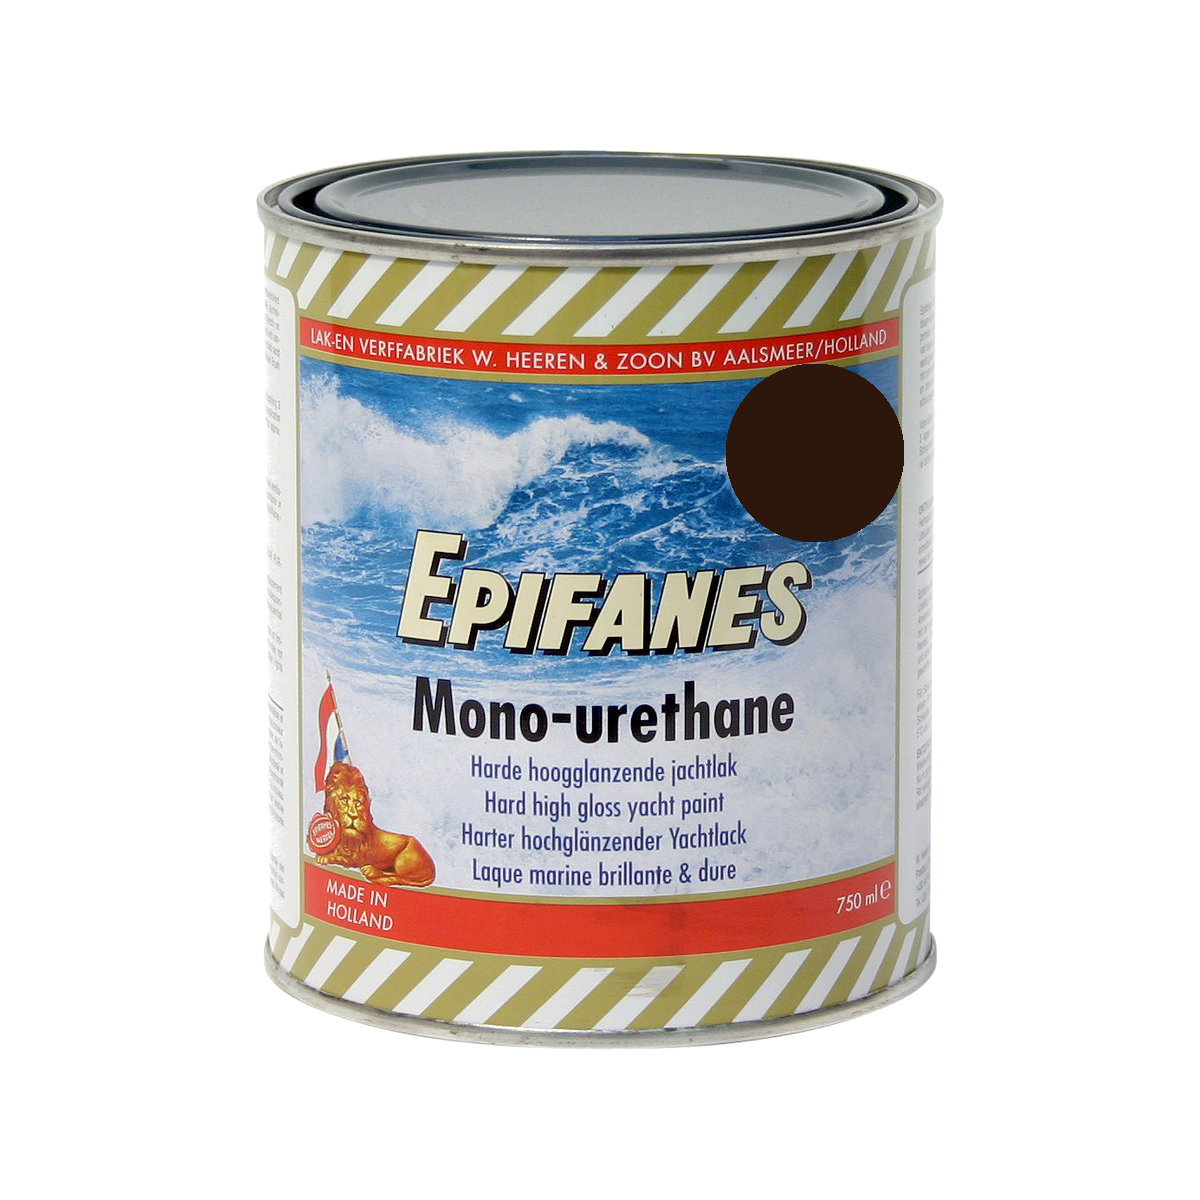 Epifanes mono-urethane jachtlak - zwart 3119, 750ml